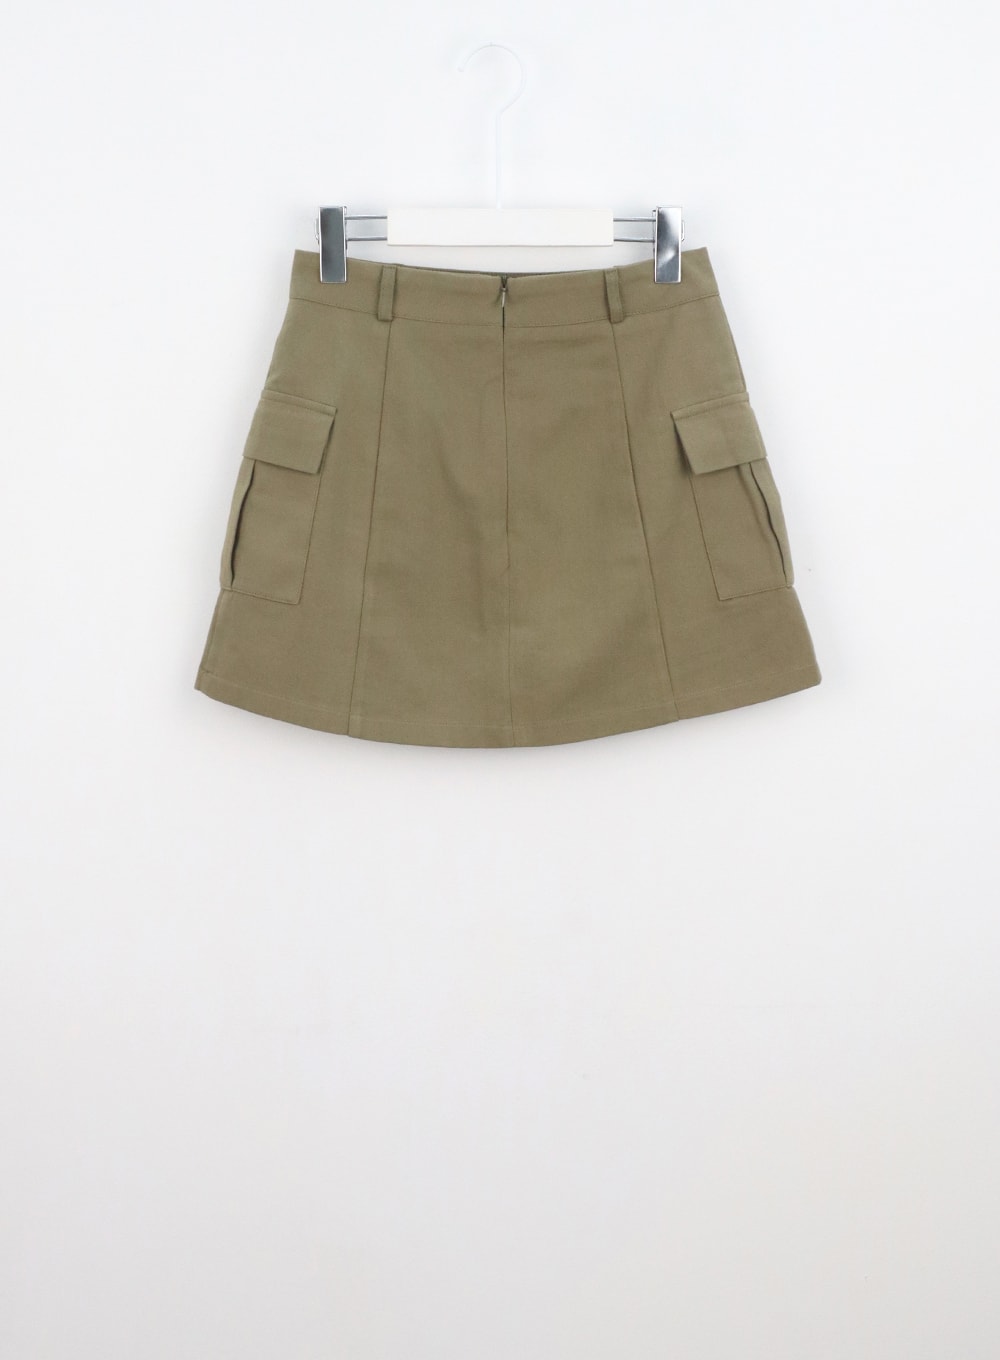 Women’s Cargo Skirt Mini Denim Mini Cargo Skirt Pockets Y2K Army Green